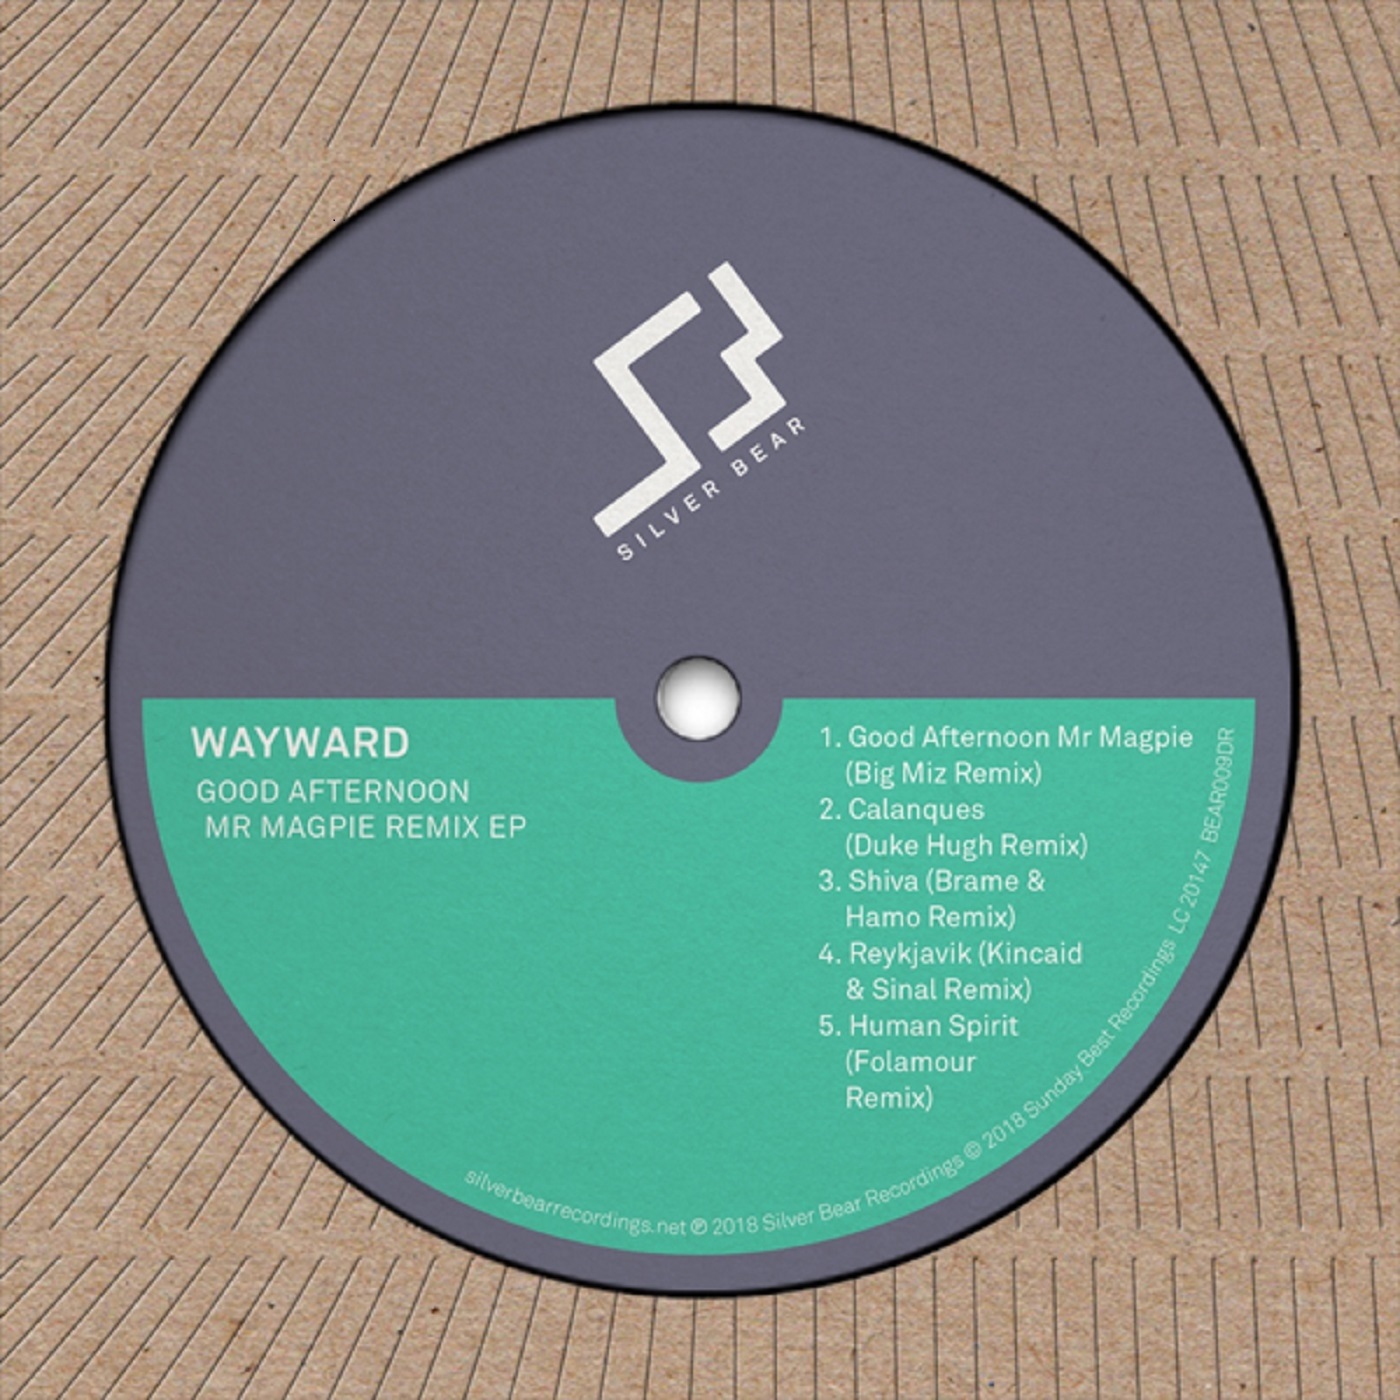 Wayward - Good Afternoon Mr Magpie Remixed / Silver Bear Recordings